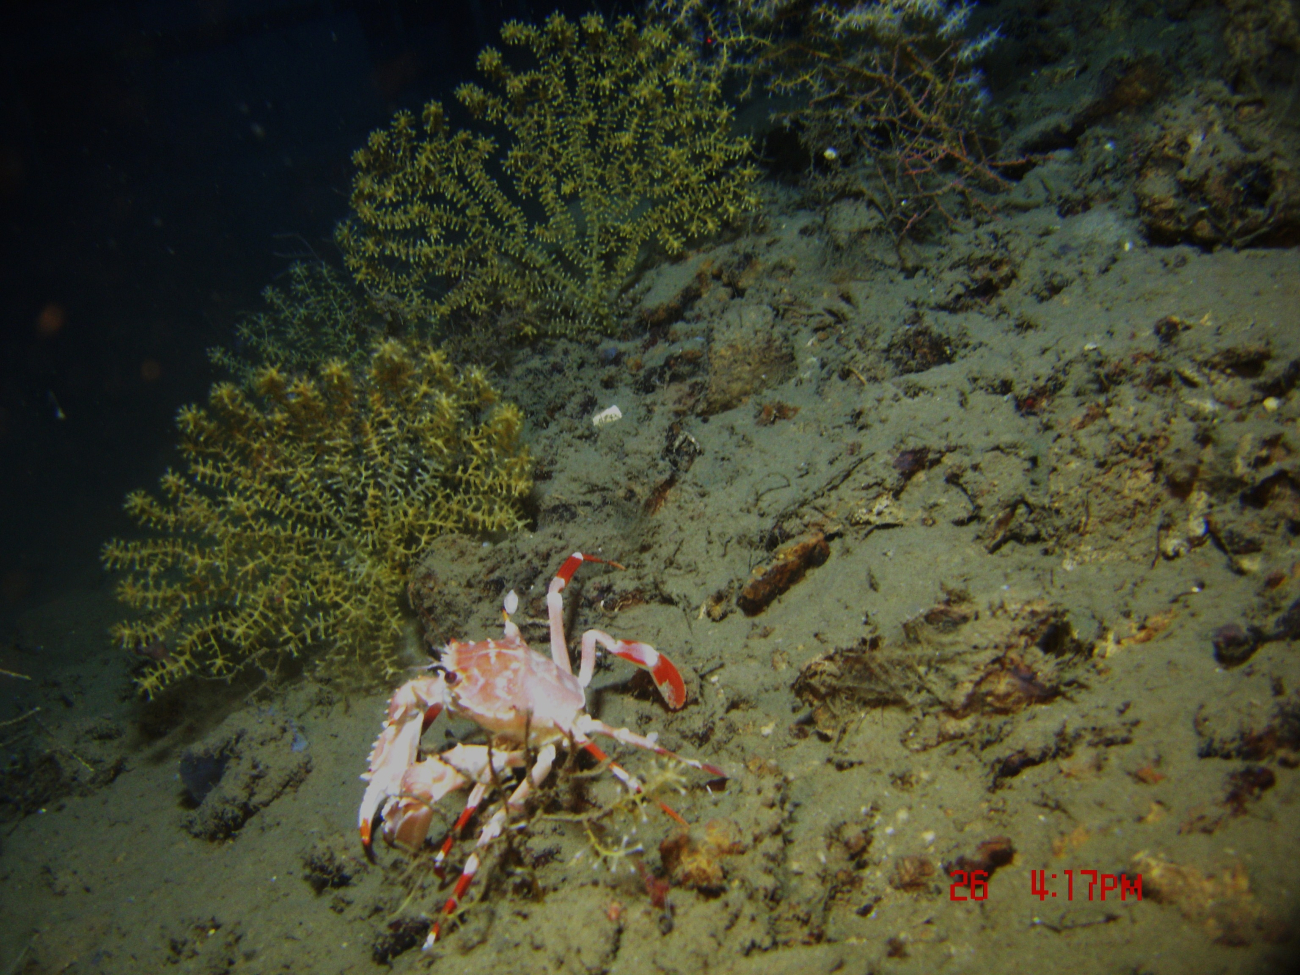 Bathyal swimming crab (Bathynectes longispina) and Paramuricea sp